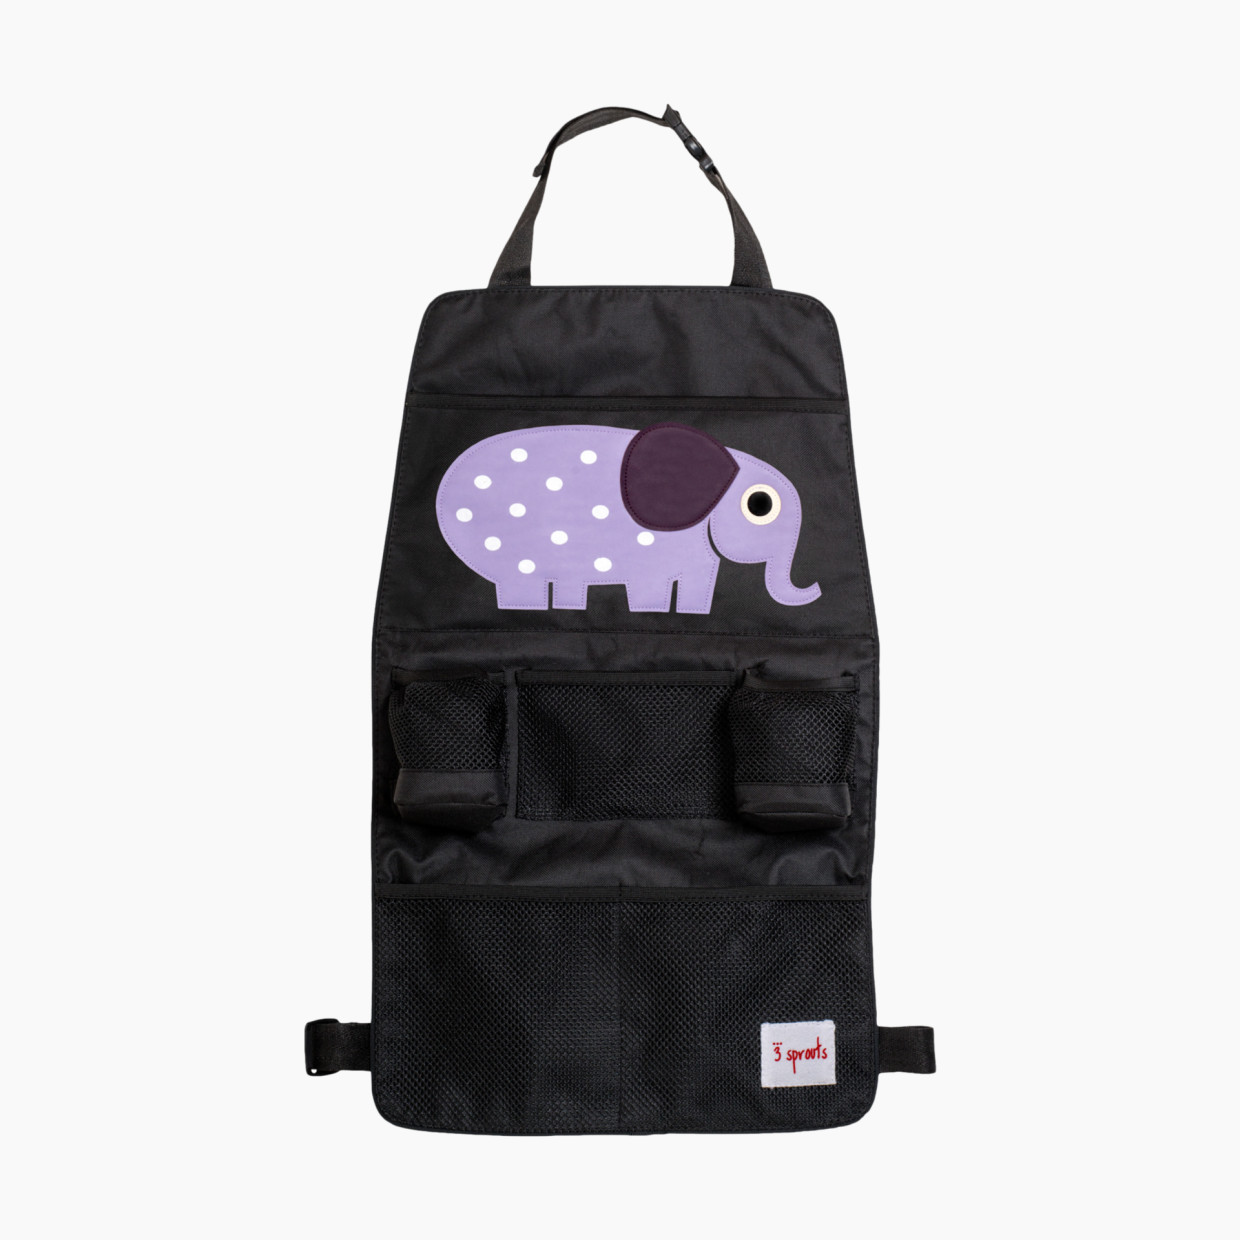 3 Sprouts Backseat Organizer - Purple Elephant.